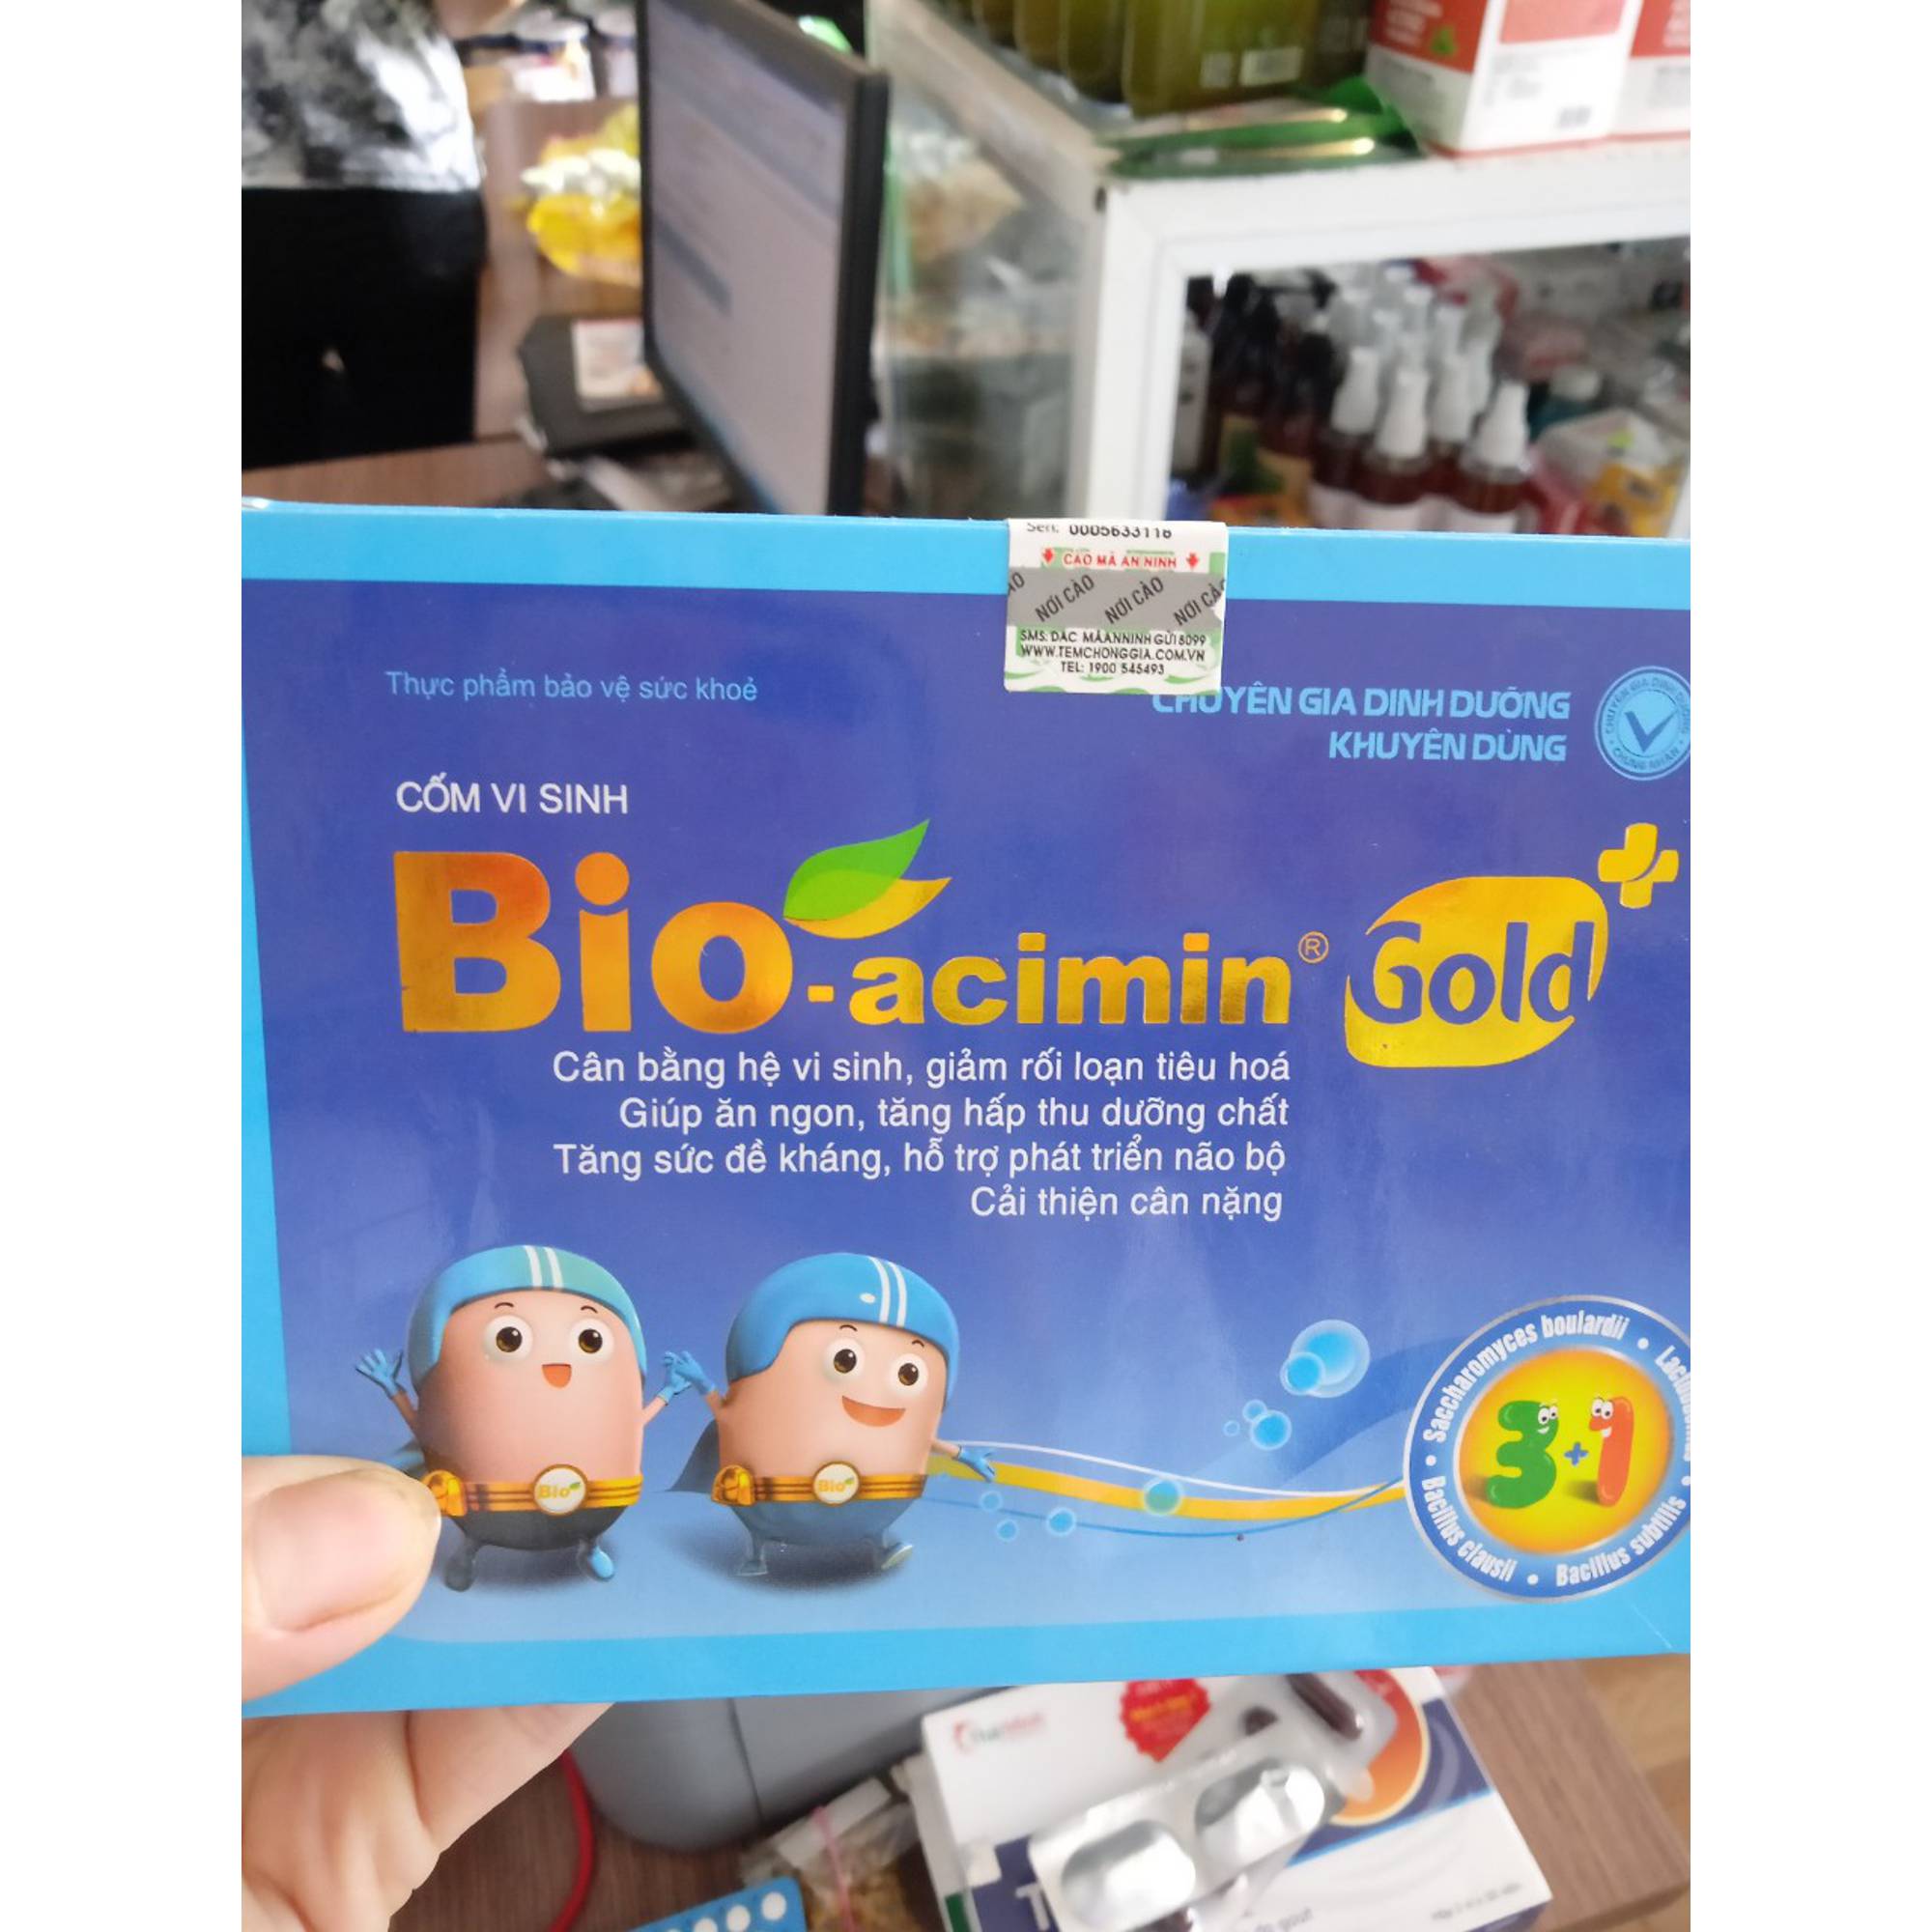 bio-acimin gold